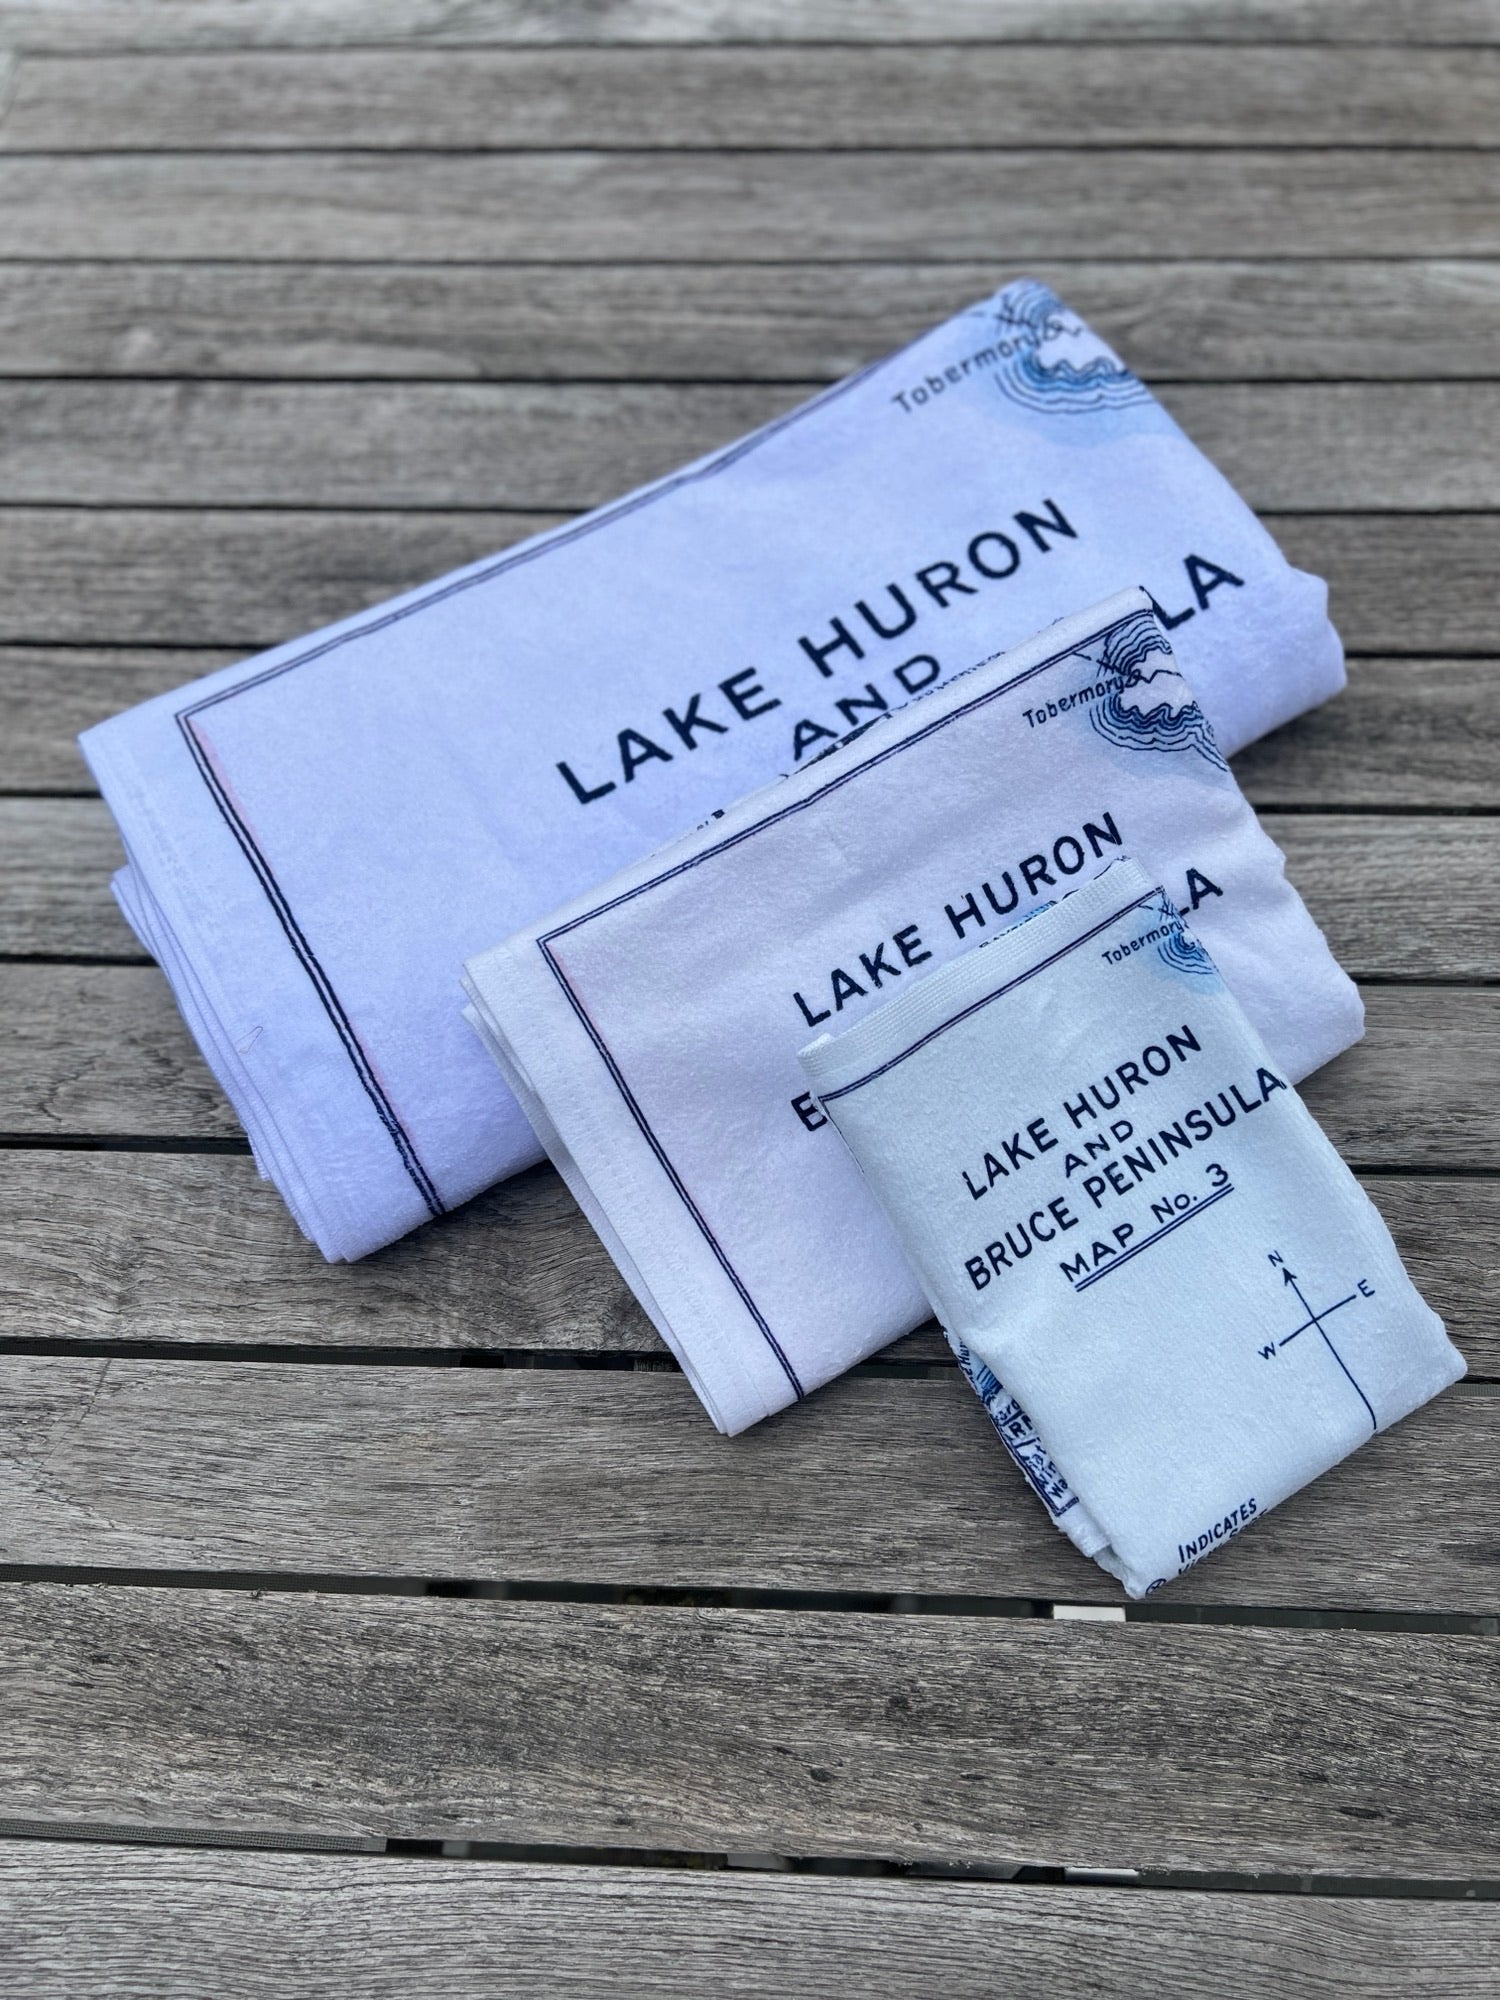 Lake Huron & Bruce Peninsula Map Towel Trio